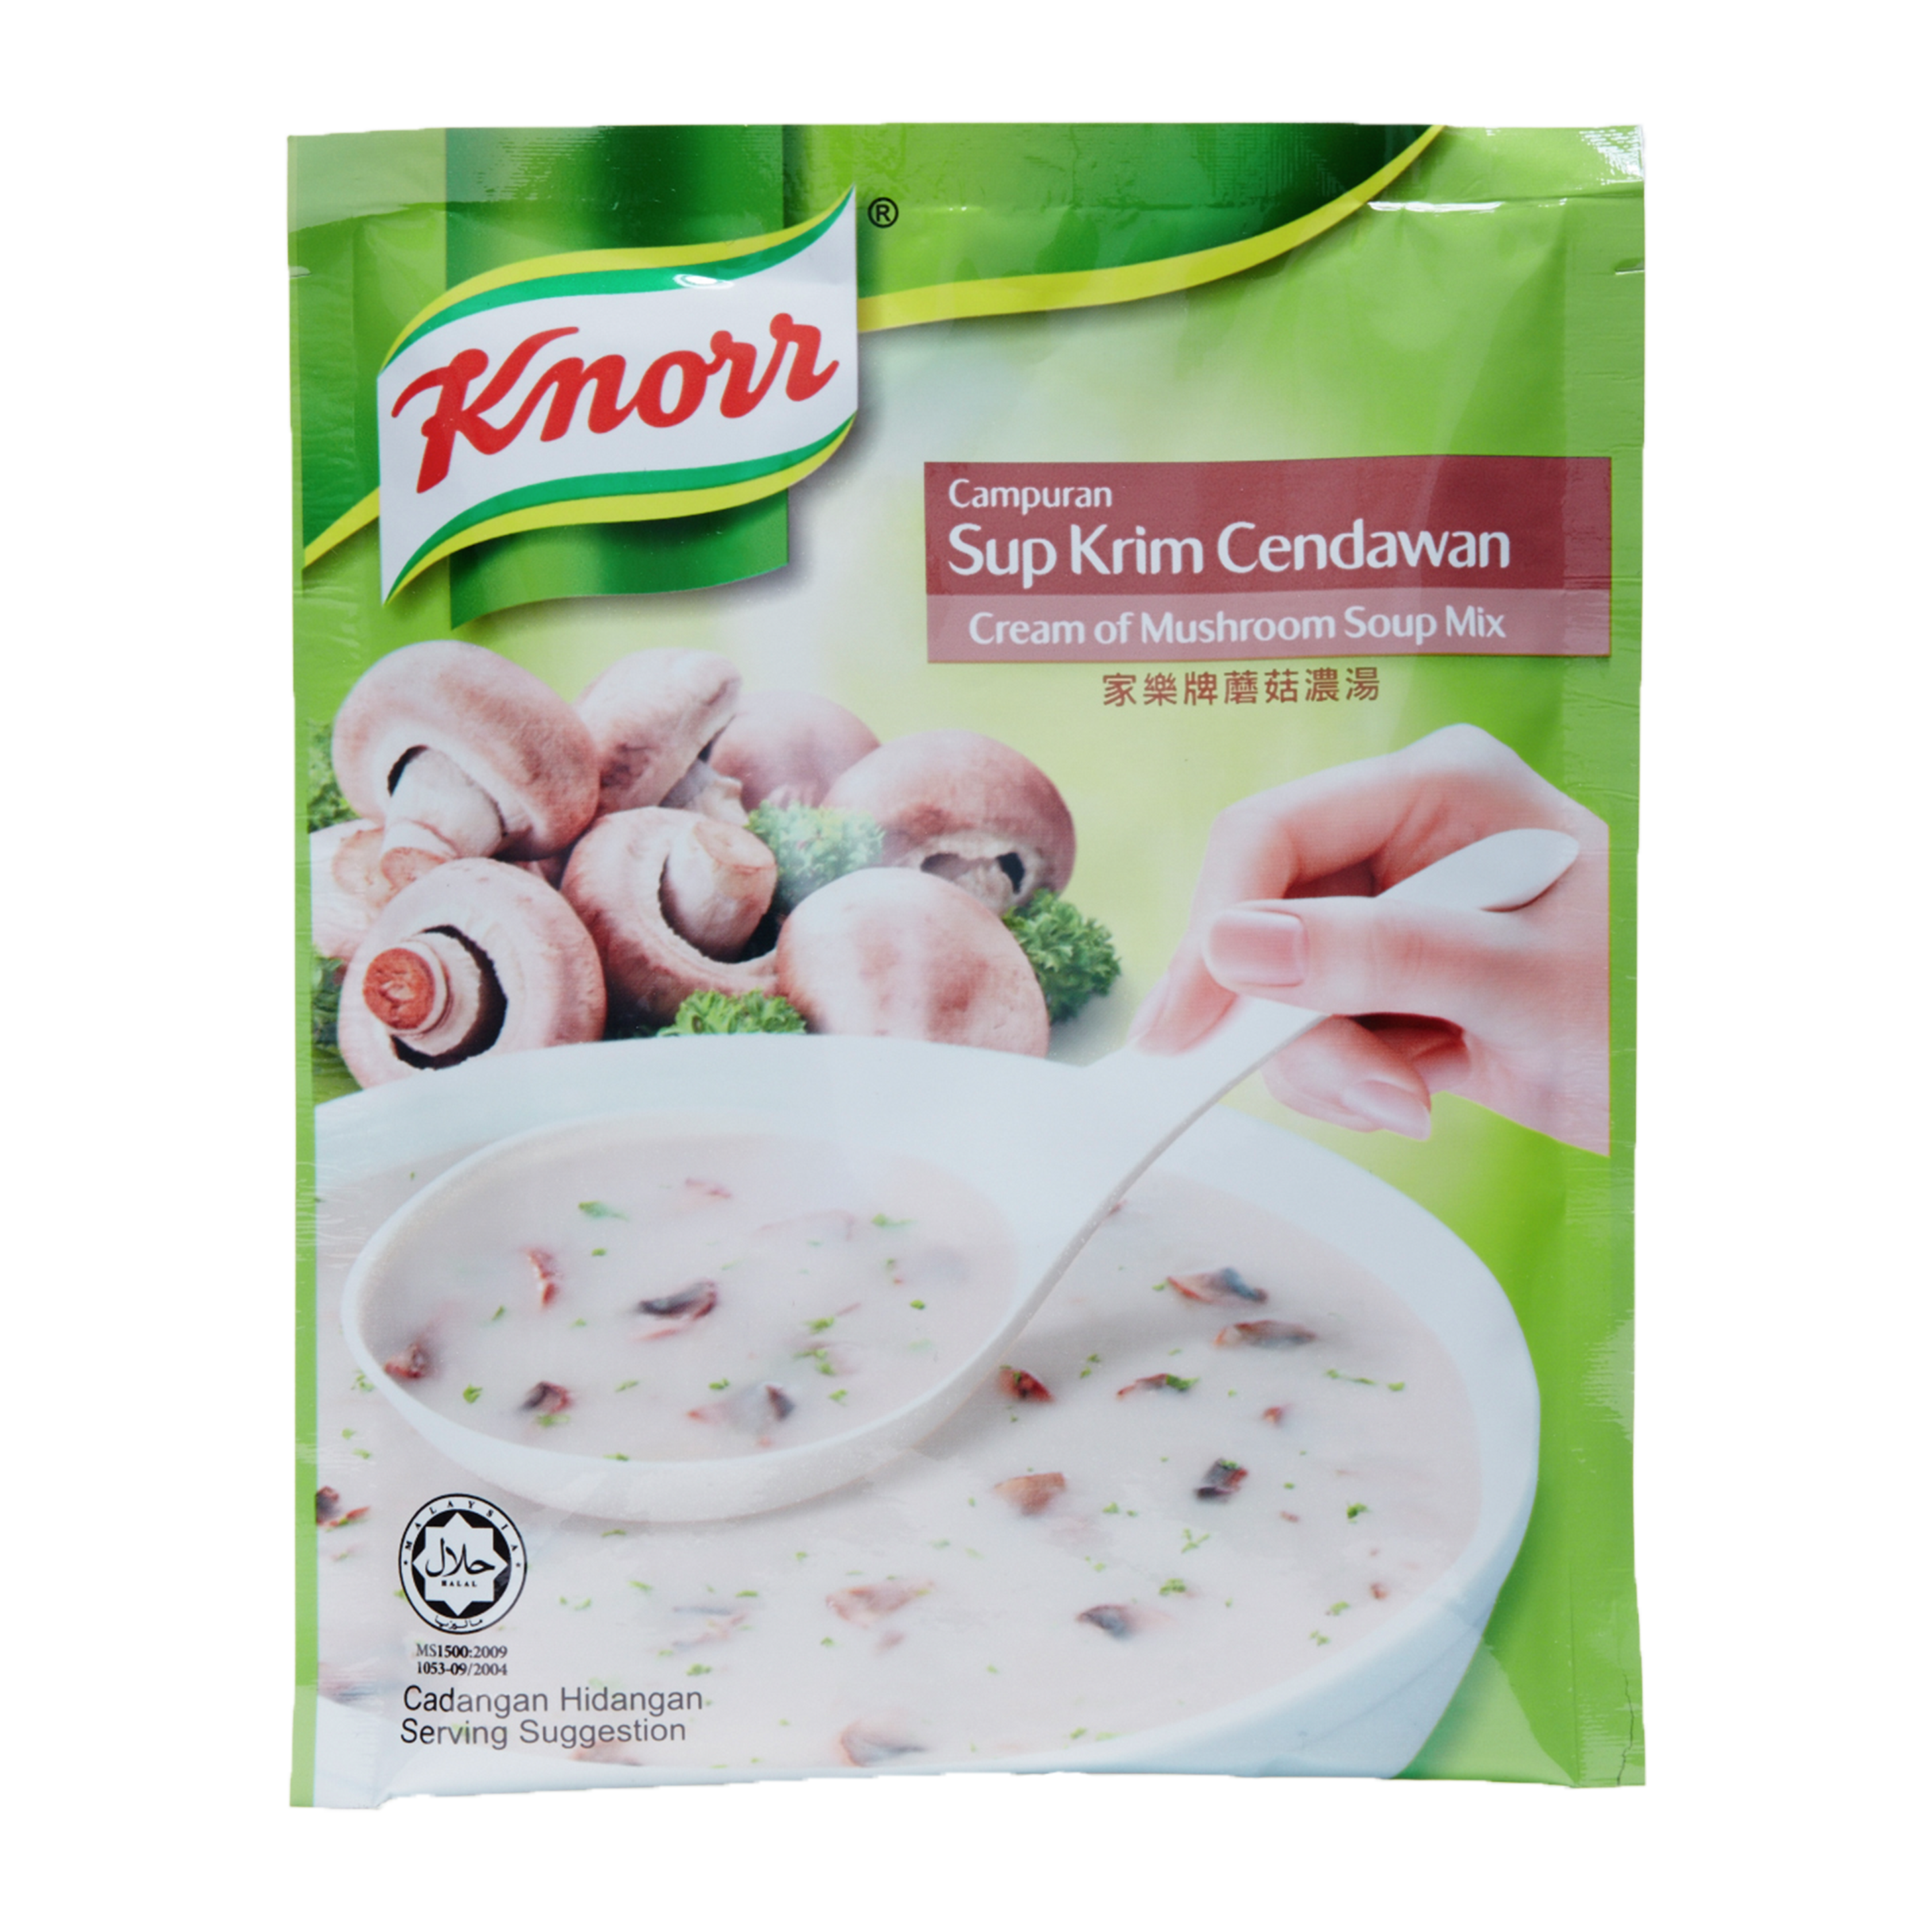 Knorr Cream of Mushroom Soup